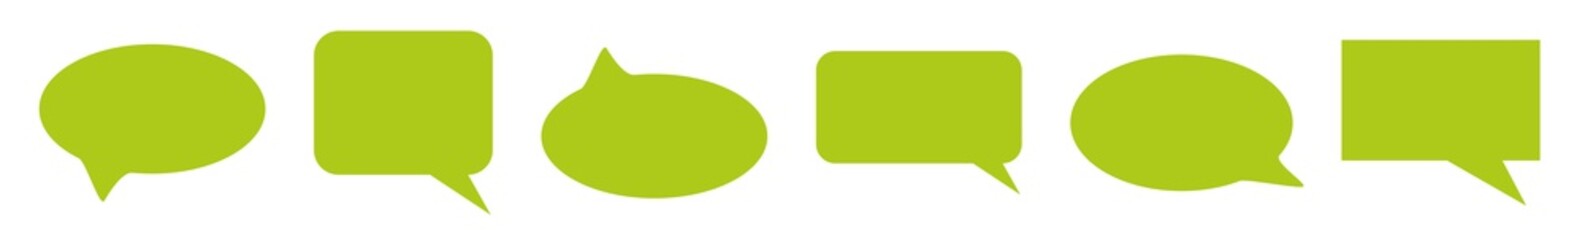 speech bubble balloon icon green | blank bubbles | communication symbol | message logo | cartoon sig